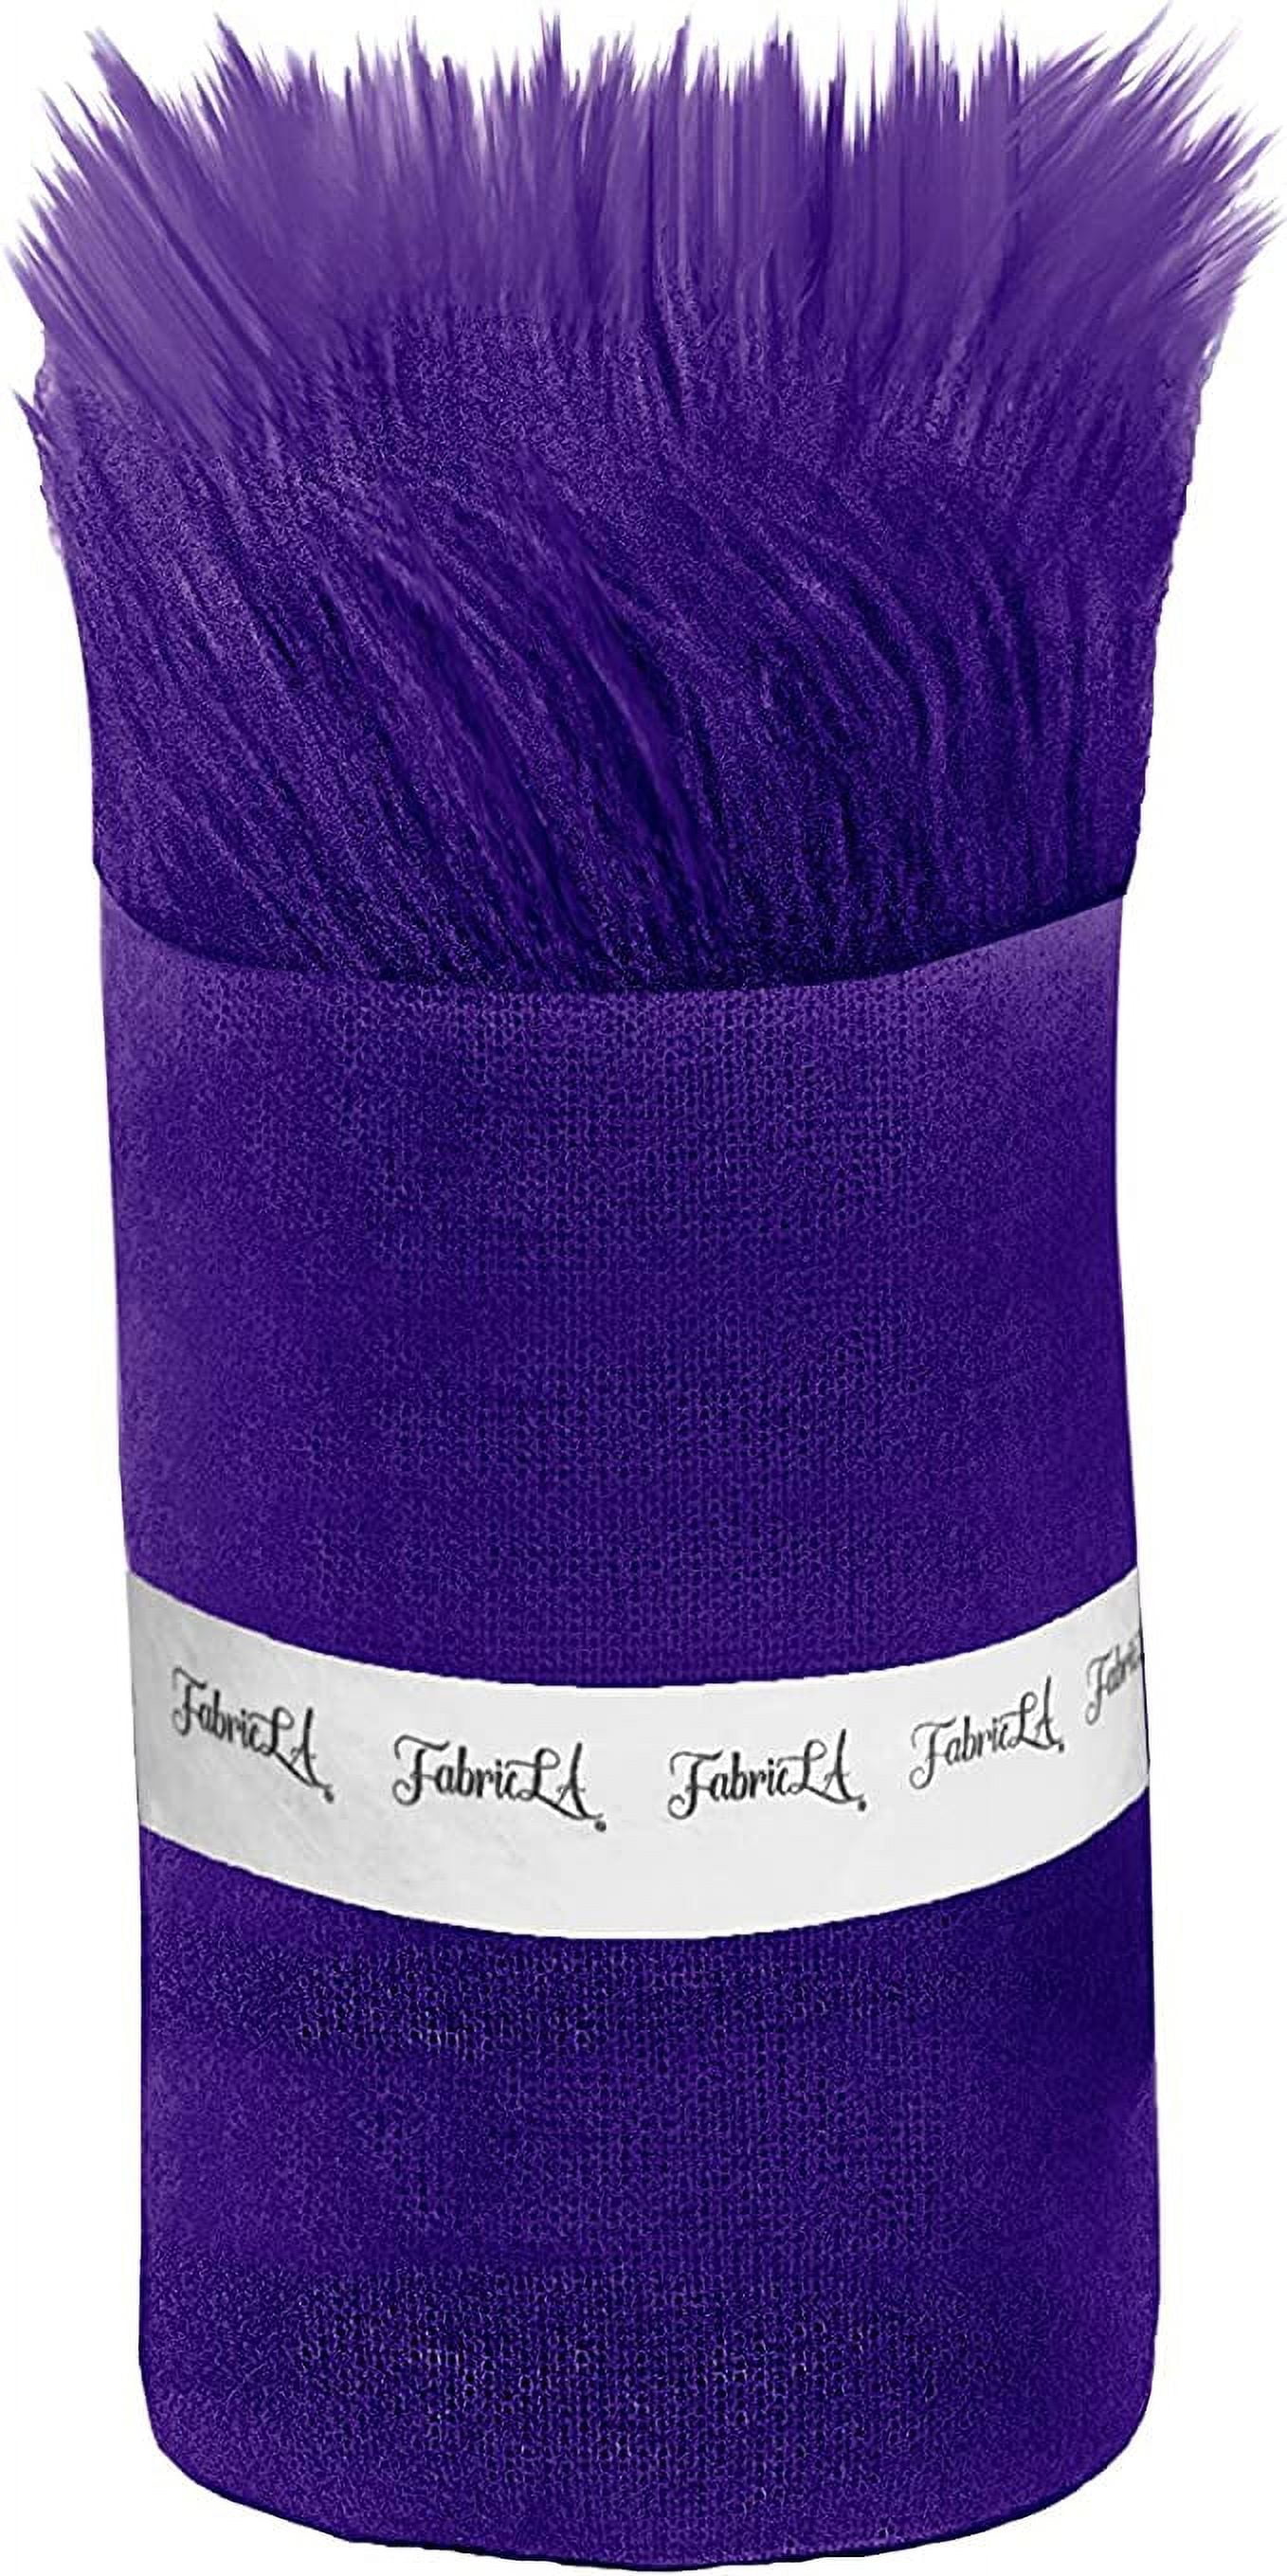 Faux Fur Fabric - Purple / Brown Multi-Color Decoration Soft Furry Fab